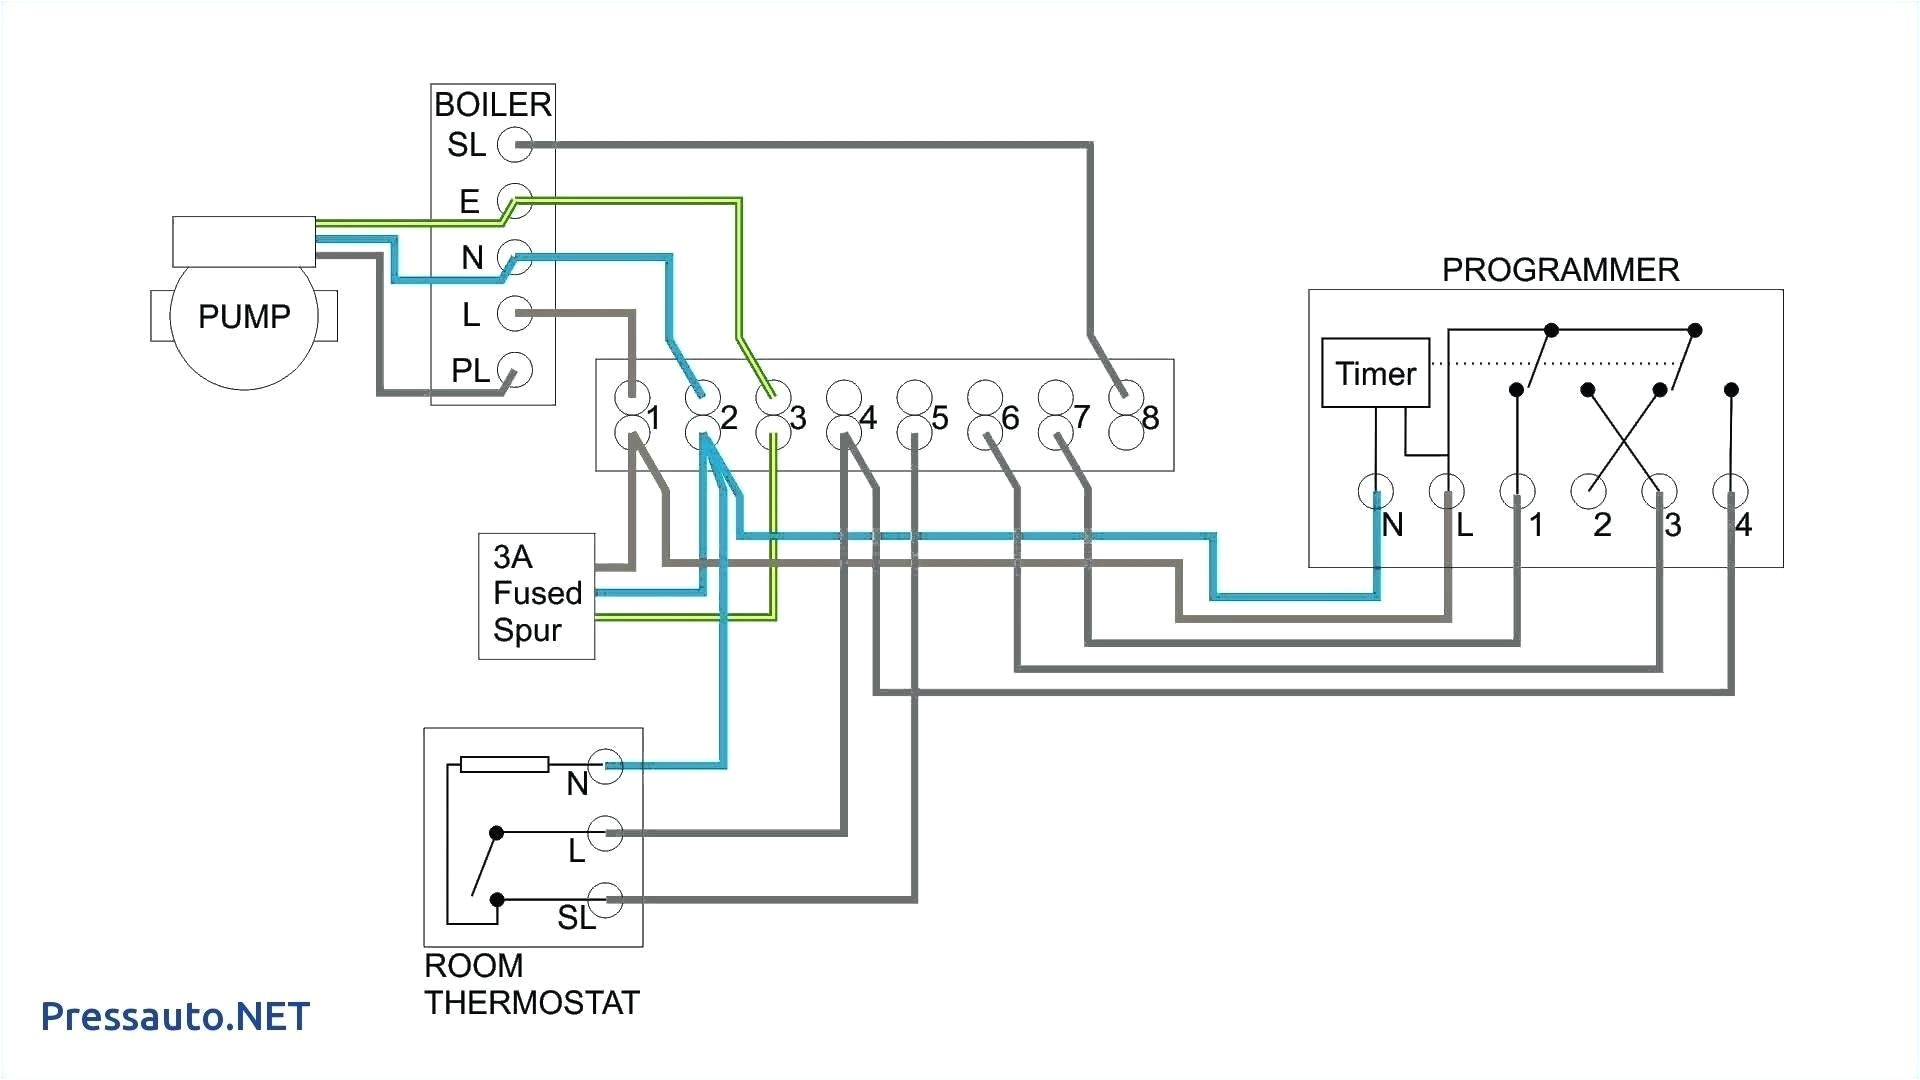 Nuheat thermostat Wiring Diagram Home thermostat Wiring Wiring Diagram Database